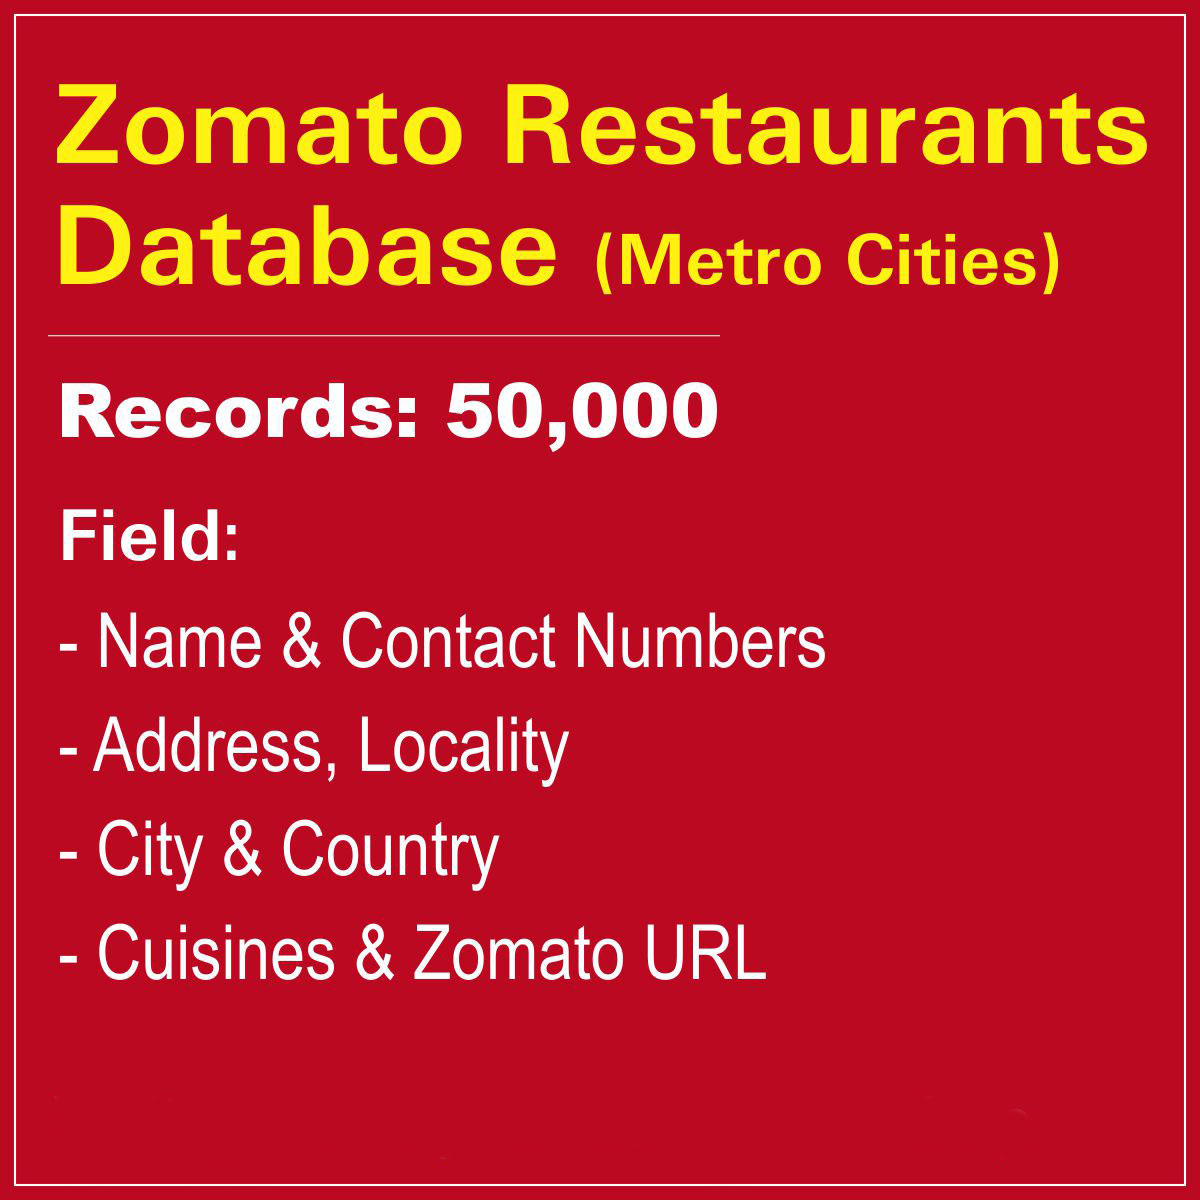 Zomato Restaurant Database